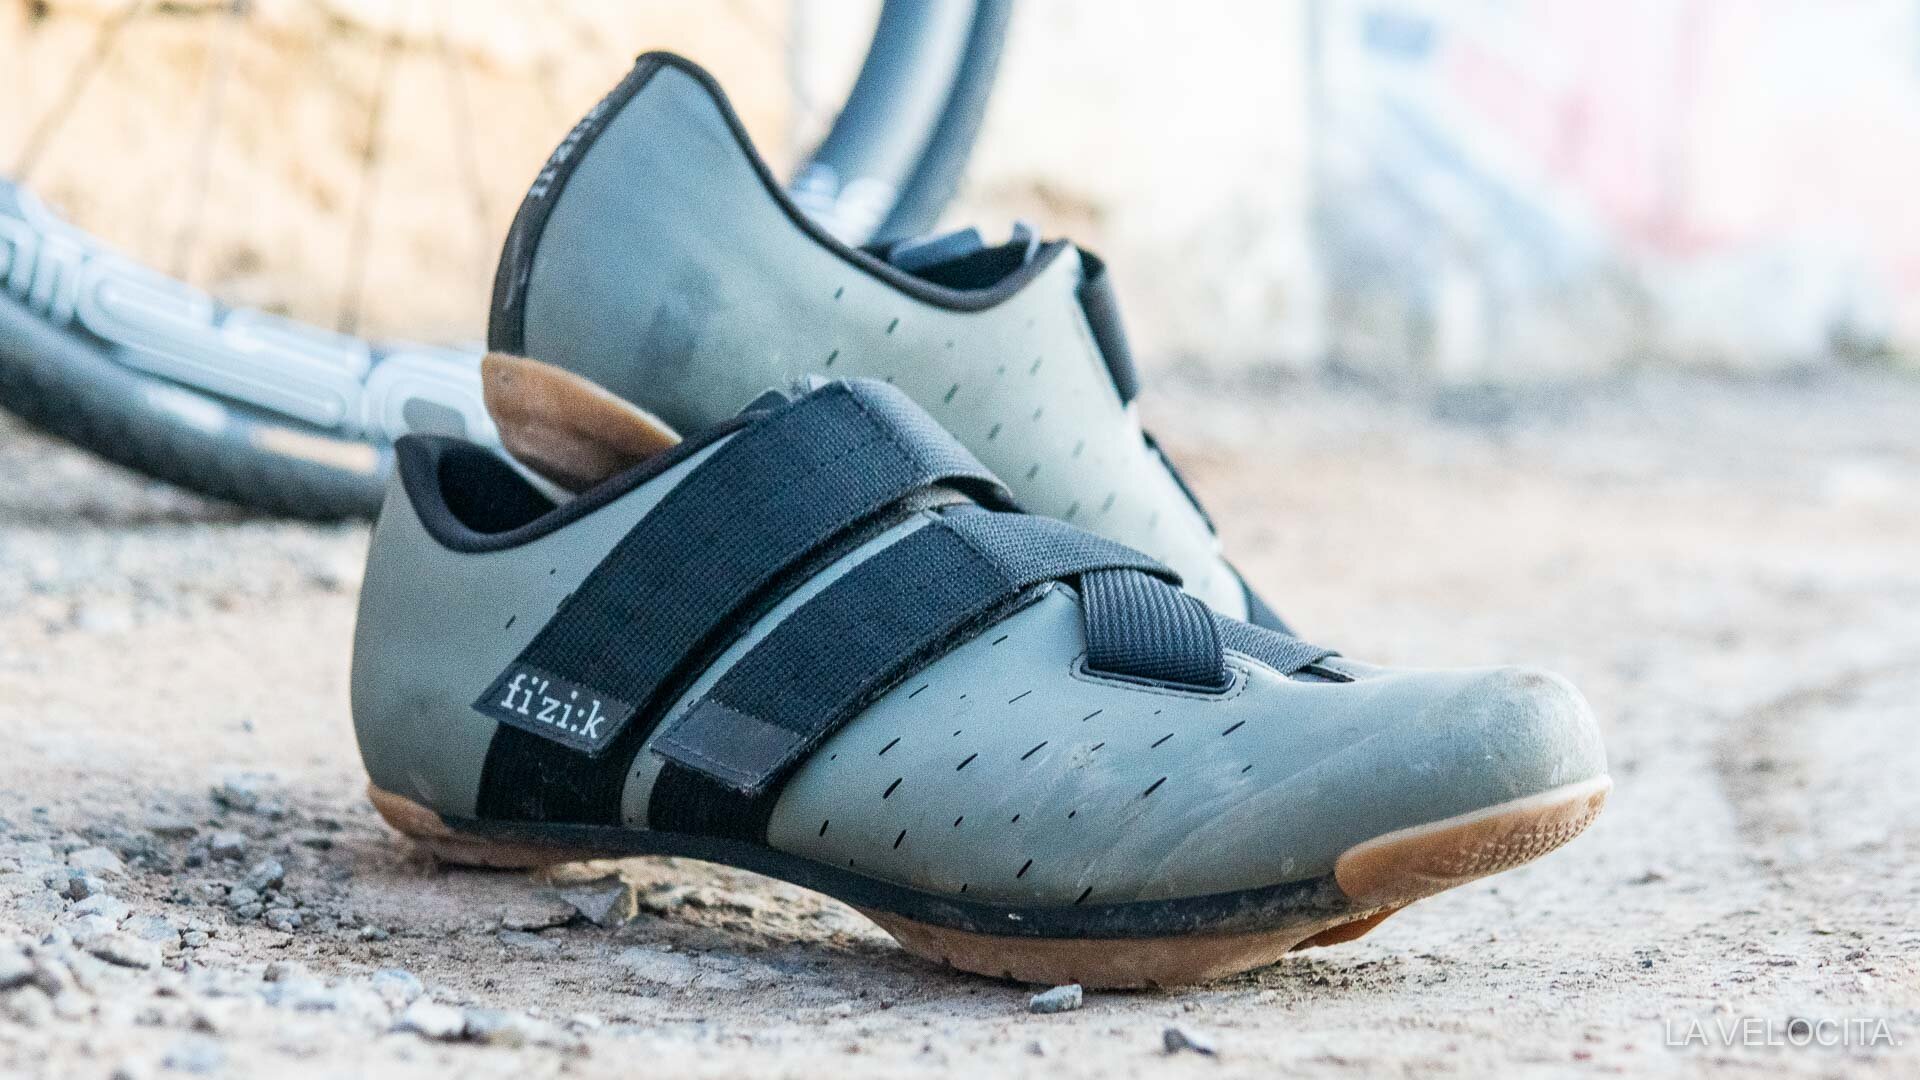 Details about   Fizik X4 Terra Powerstrap Men's Mountain Bike Shoes Mud/Carmel EU 47 